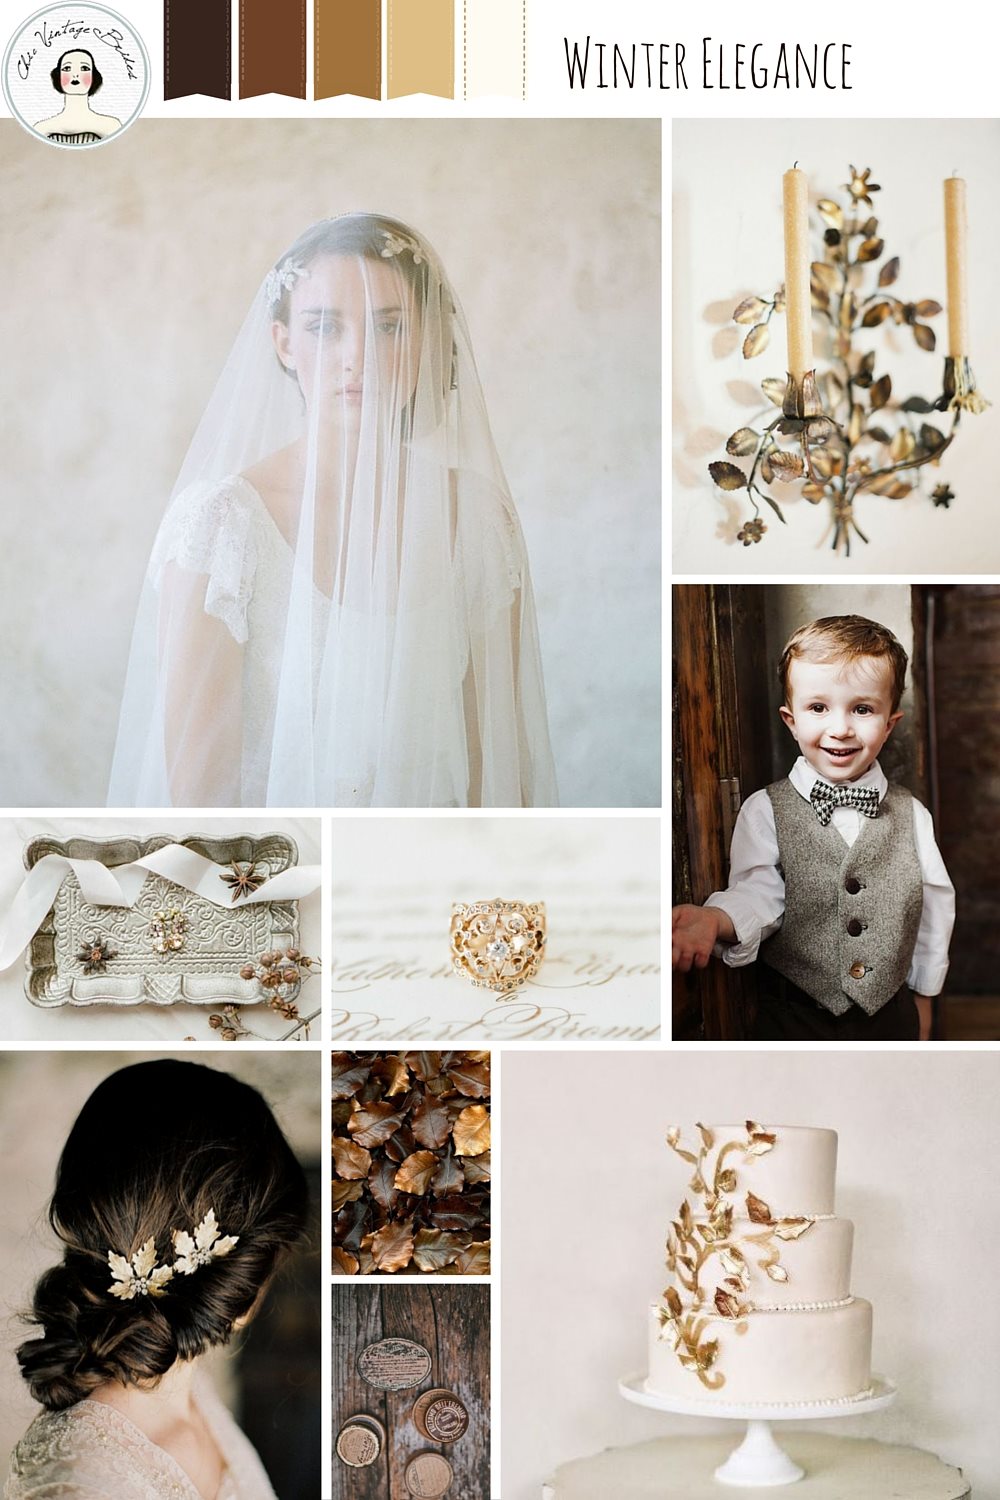 Winter Elegance – Beautiful Winter Wedding Inspiration Board in Coffee, Bronze & Gold